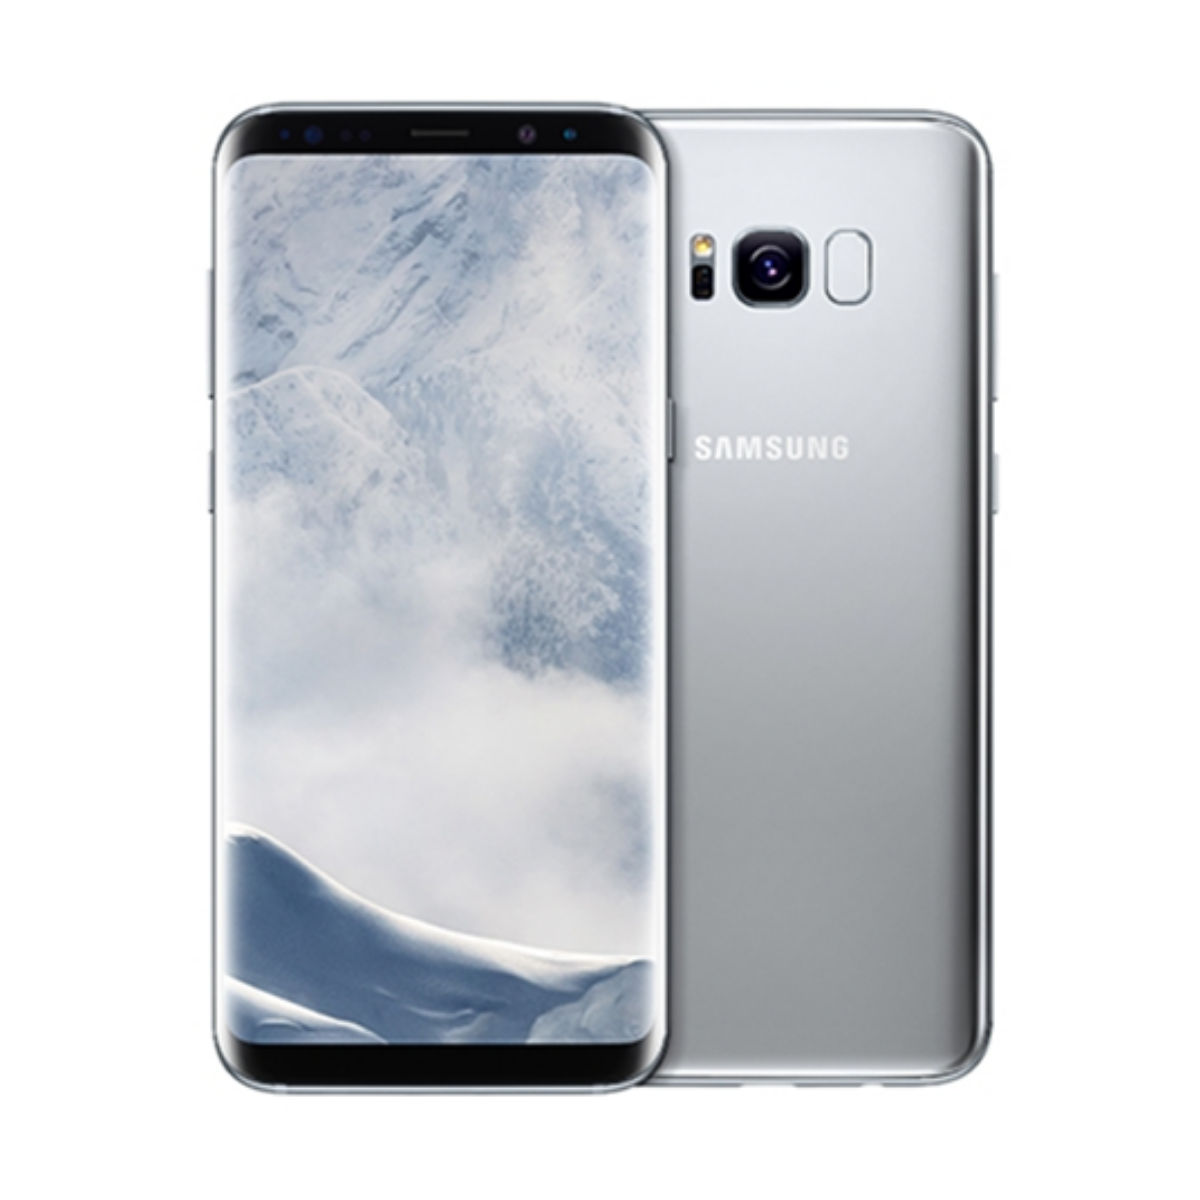 Sim Free Samsung Galaxy S8 64GB Unlocked Mobile Phone - Silver